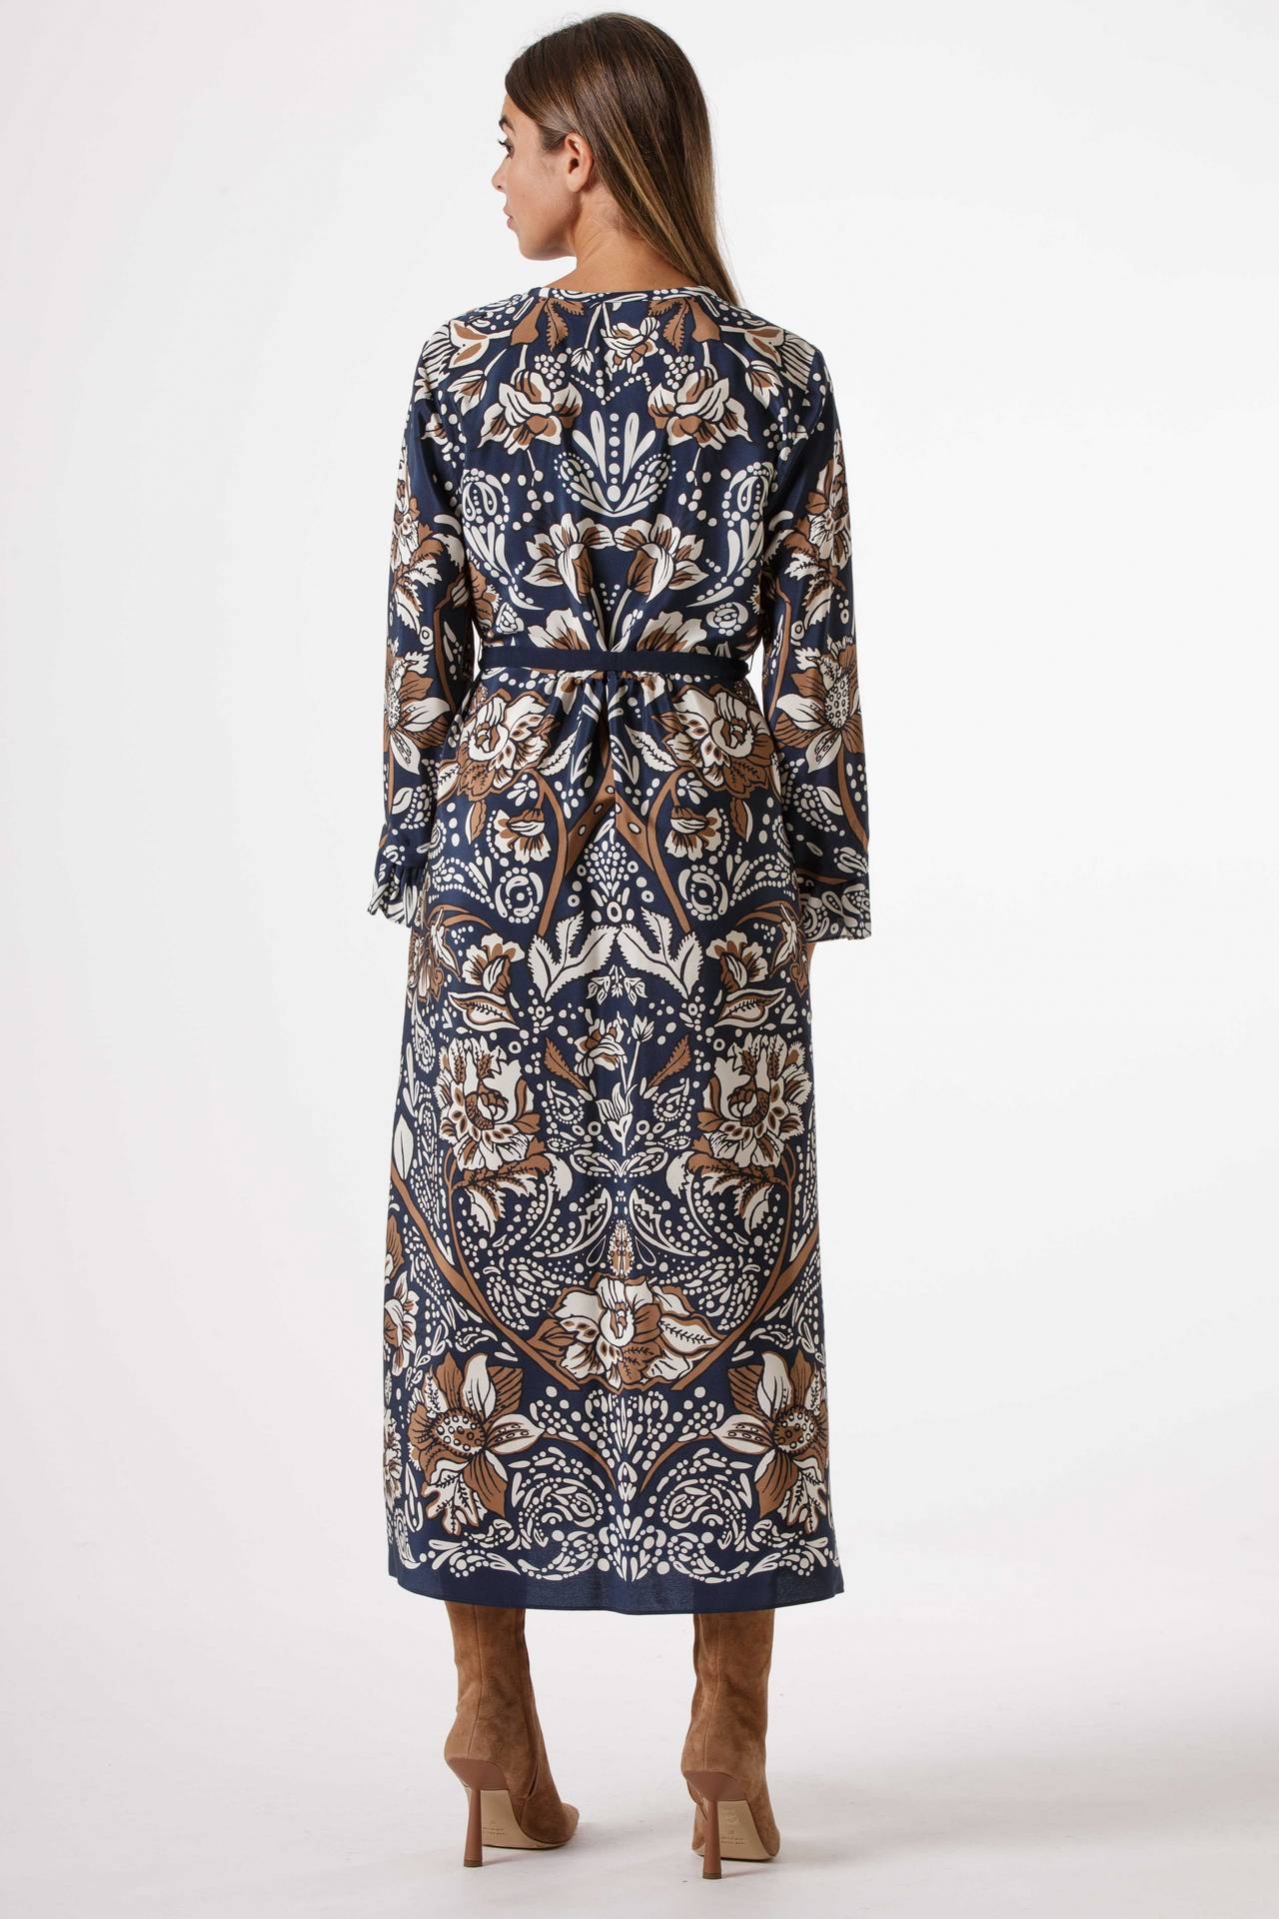 BELLA patterned dress